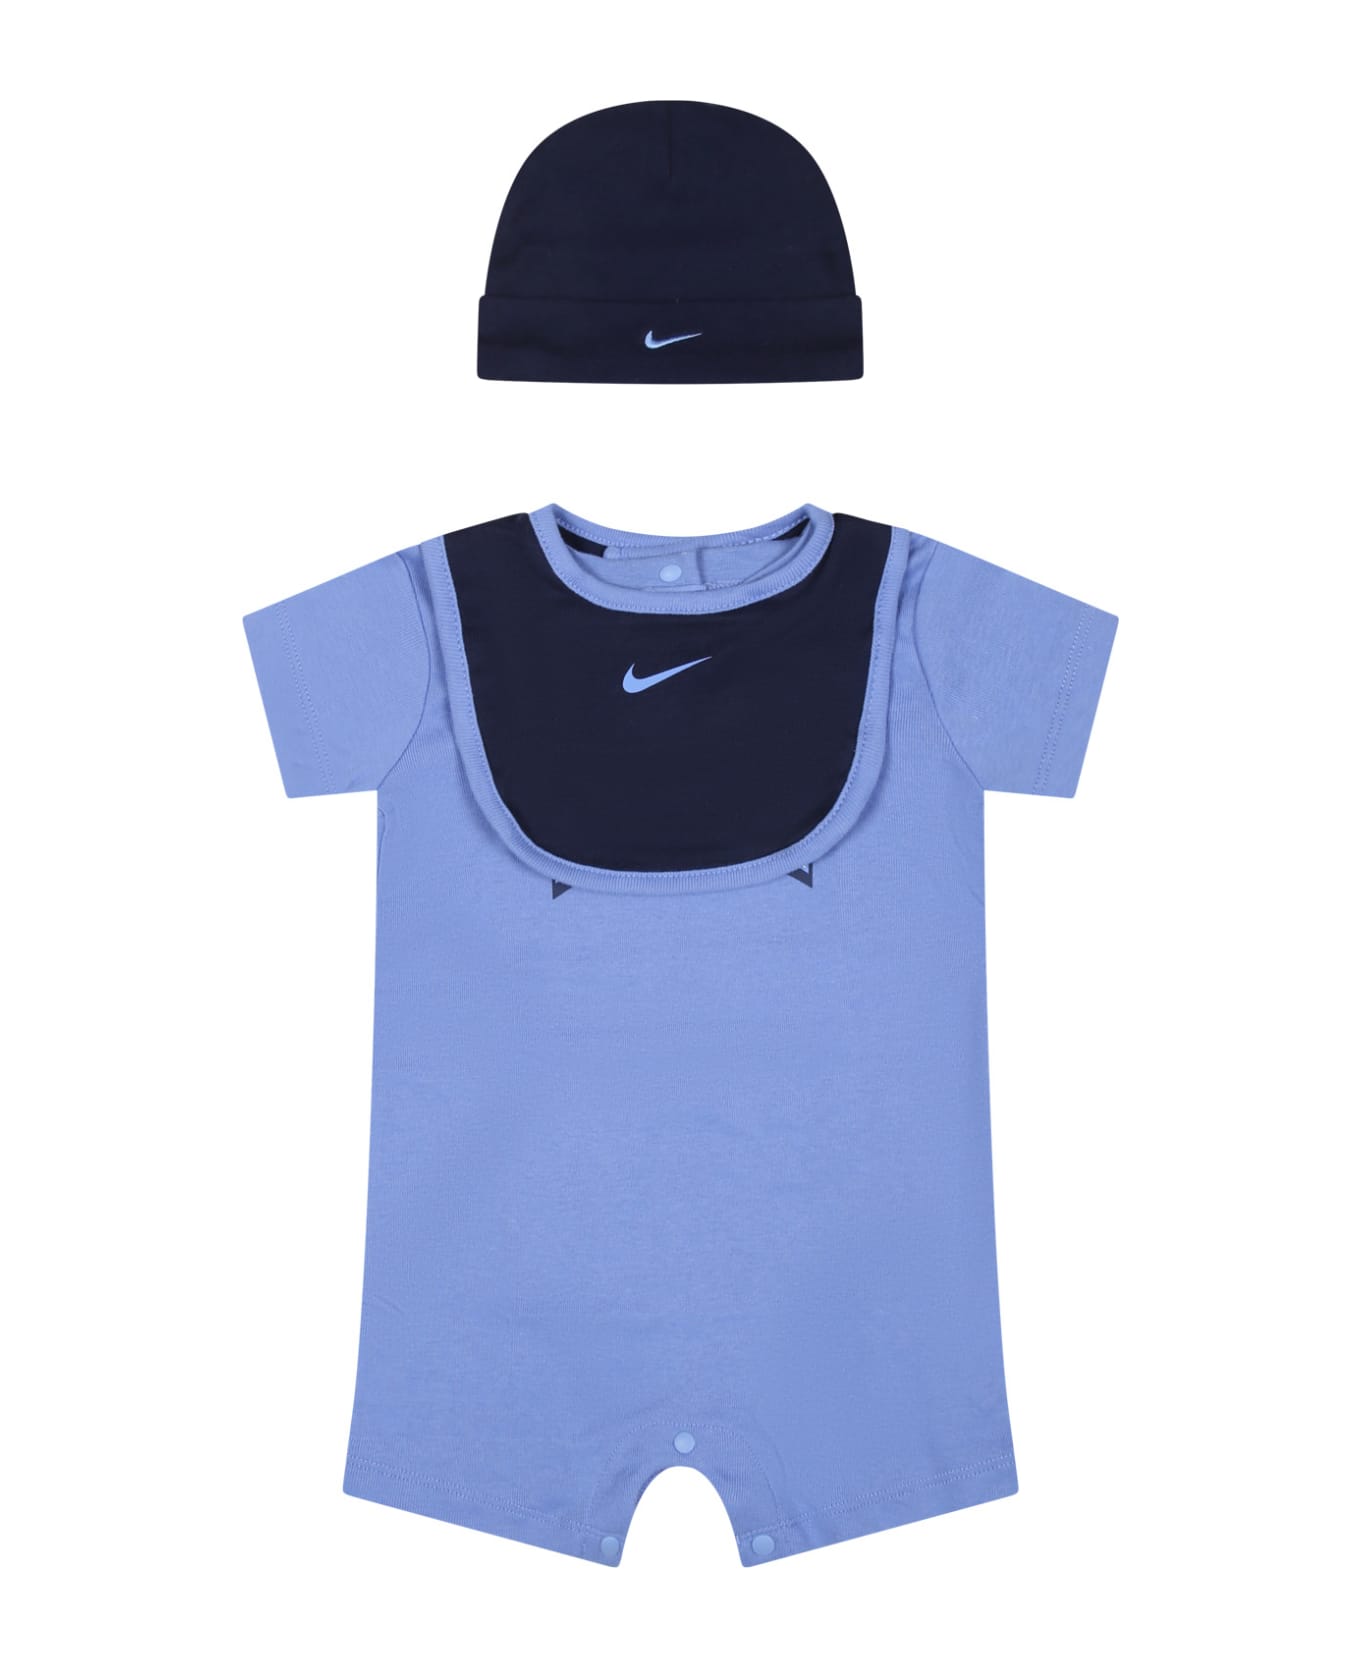 Nike Light Blue Romper Set For Baby Boy With Logo - Light Blue